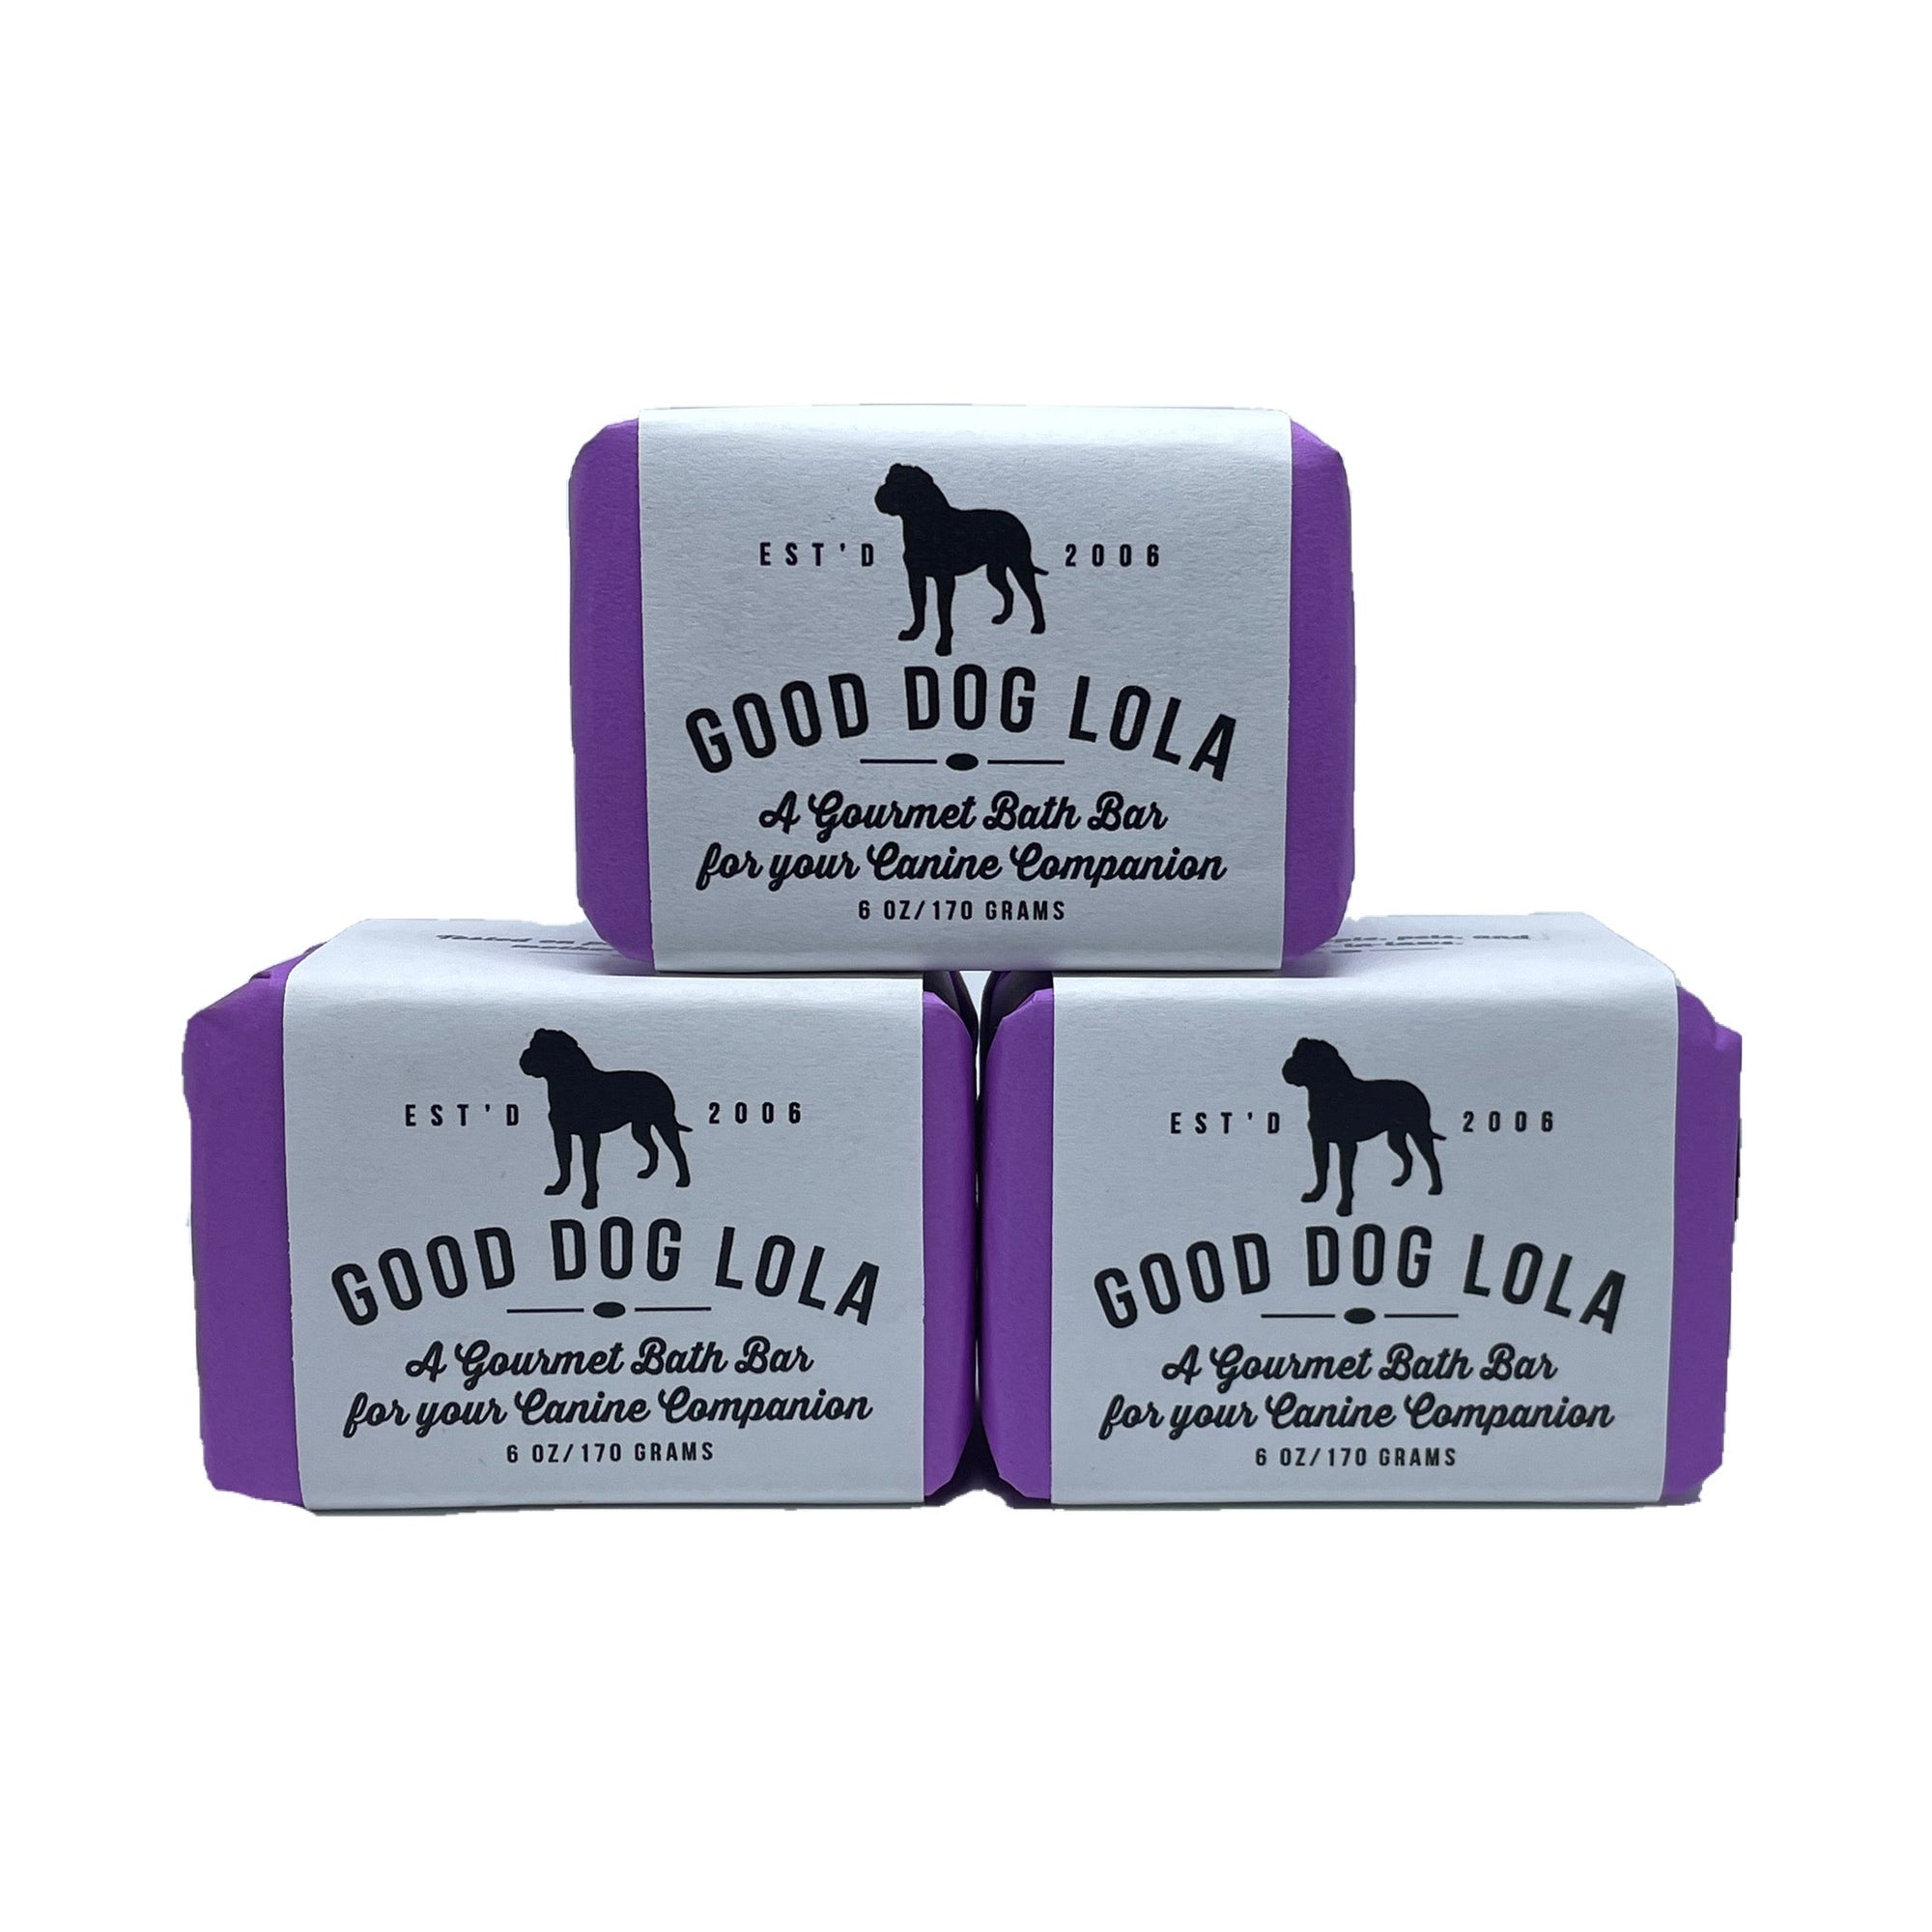 Wholesale Good Dog Lola Bath Bar